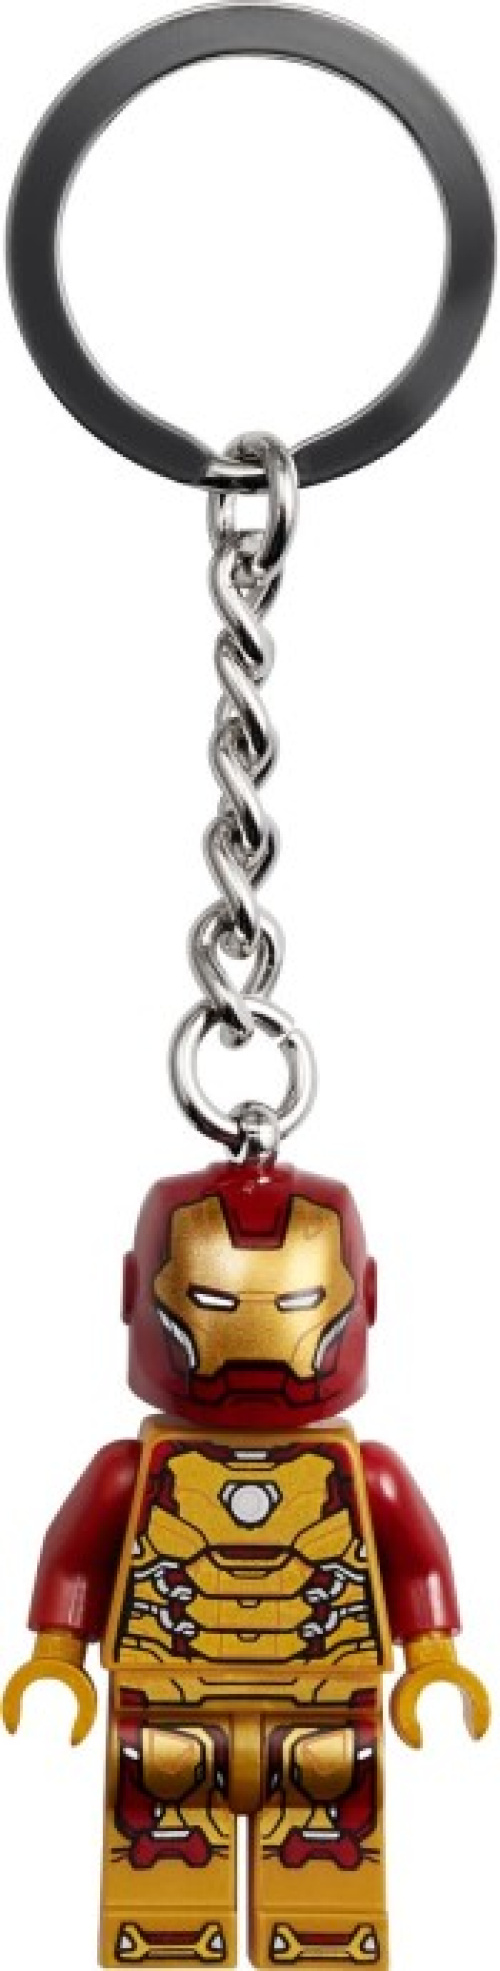 854240-1 Iron Man Key Chain